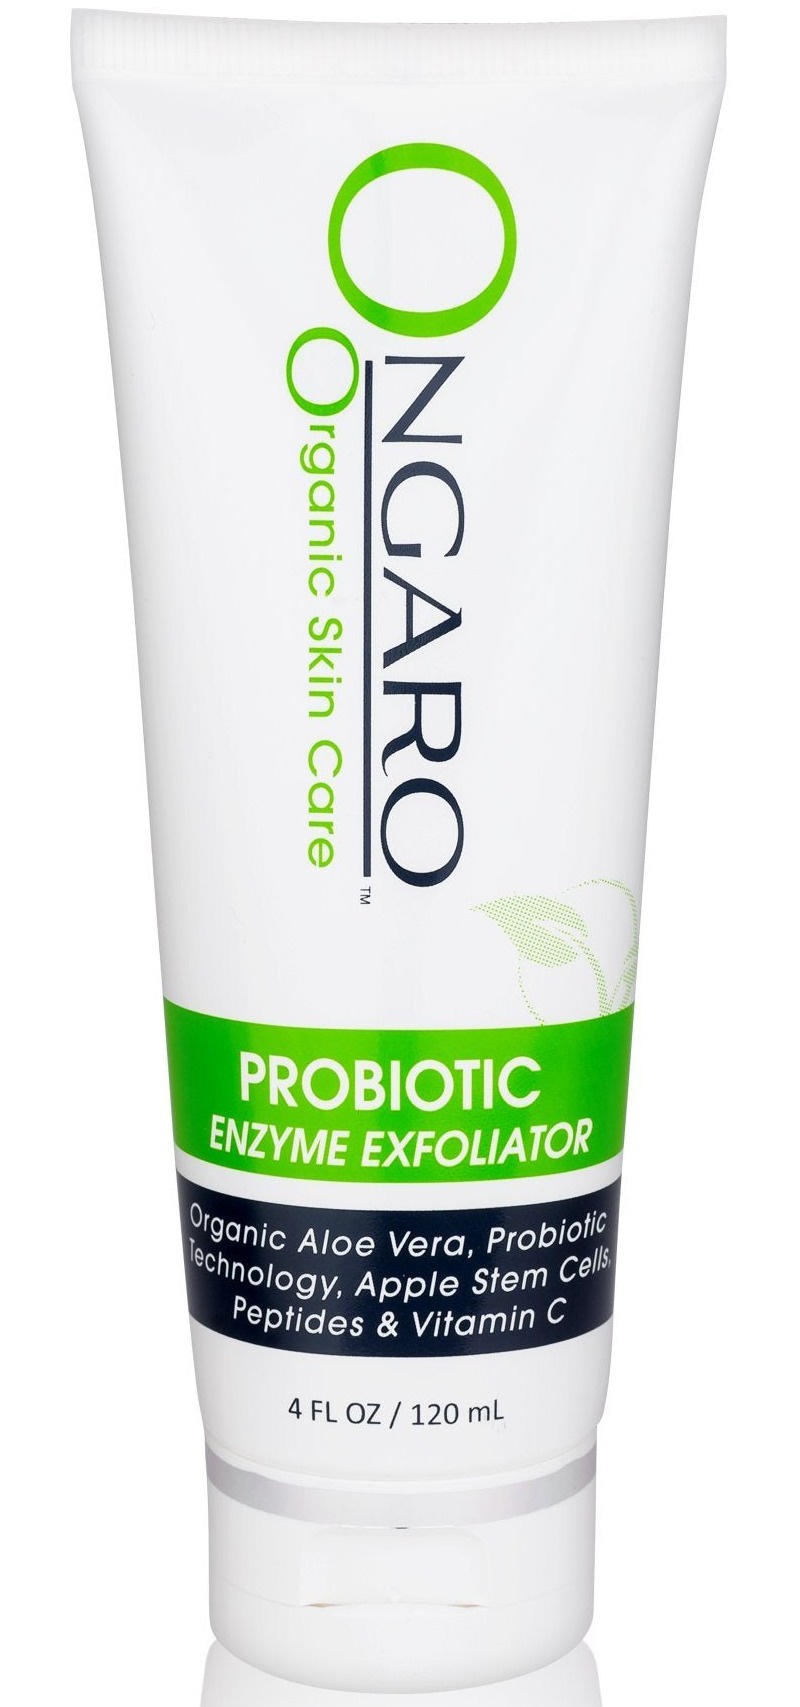 Ongaro Probiotic Enzyme Exfoliator